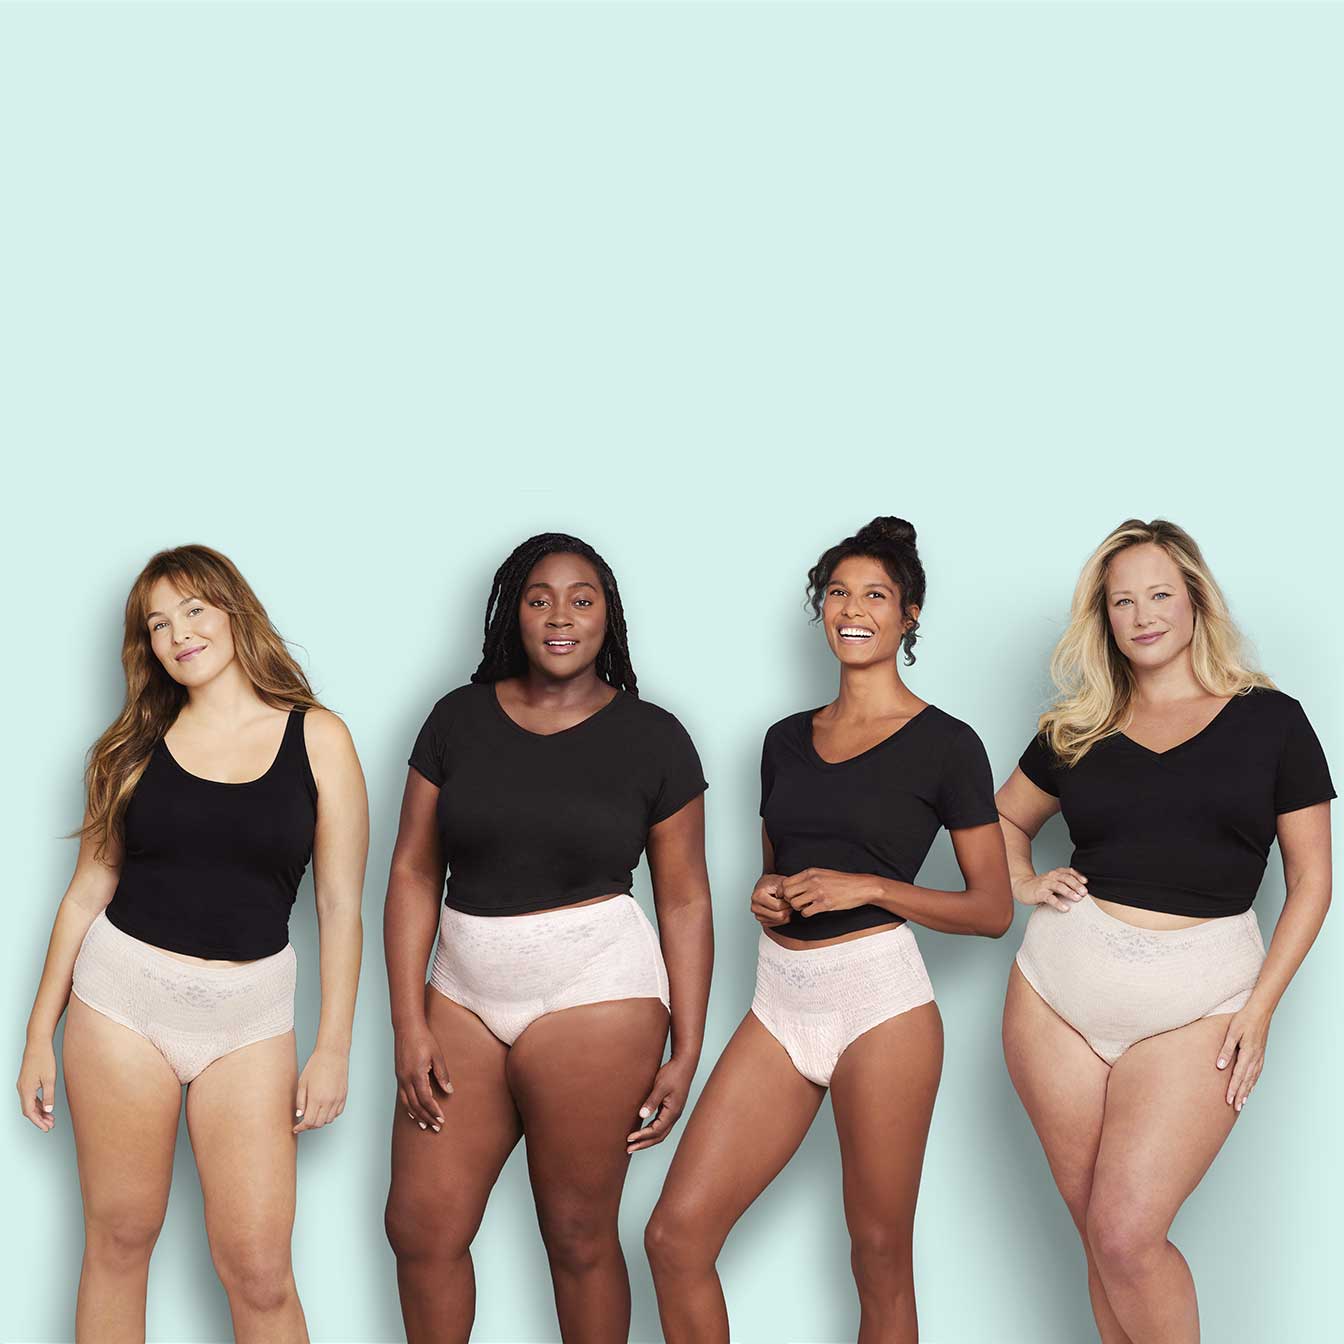 Caretex® Camellia Womens Incontinence Underwear